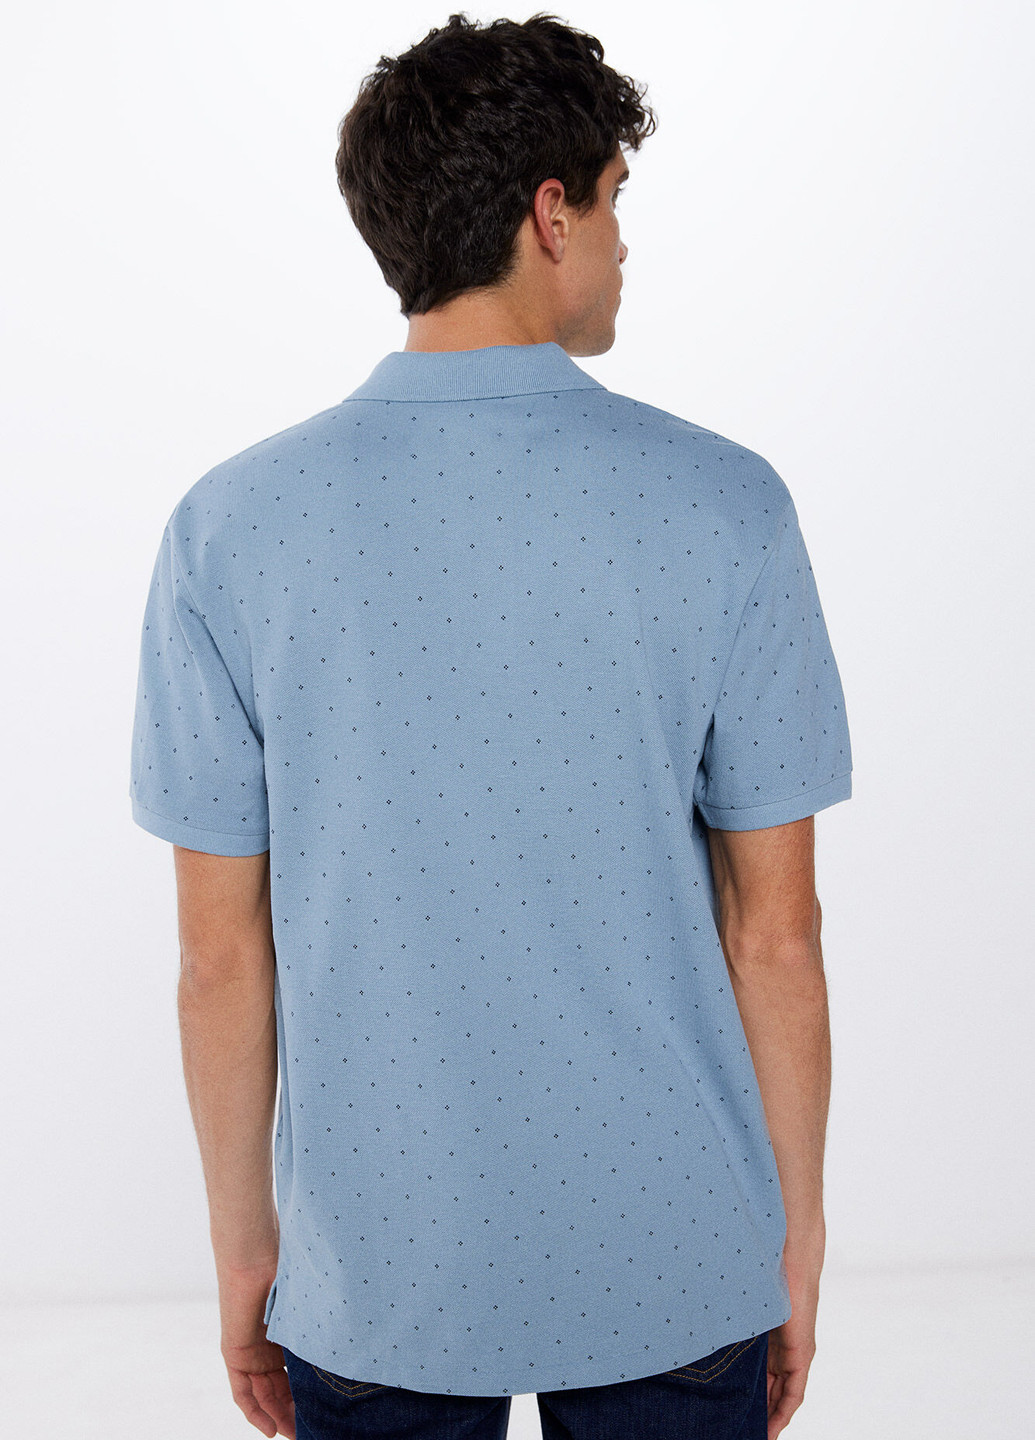 Голубой футболка-поло для мужчин Springfield с геометрическим узором